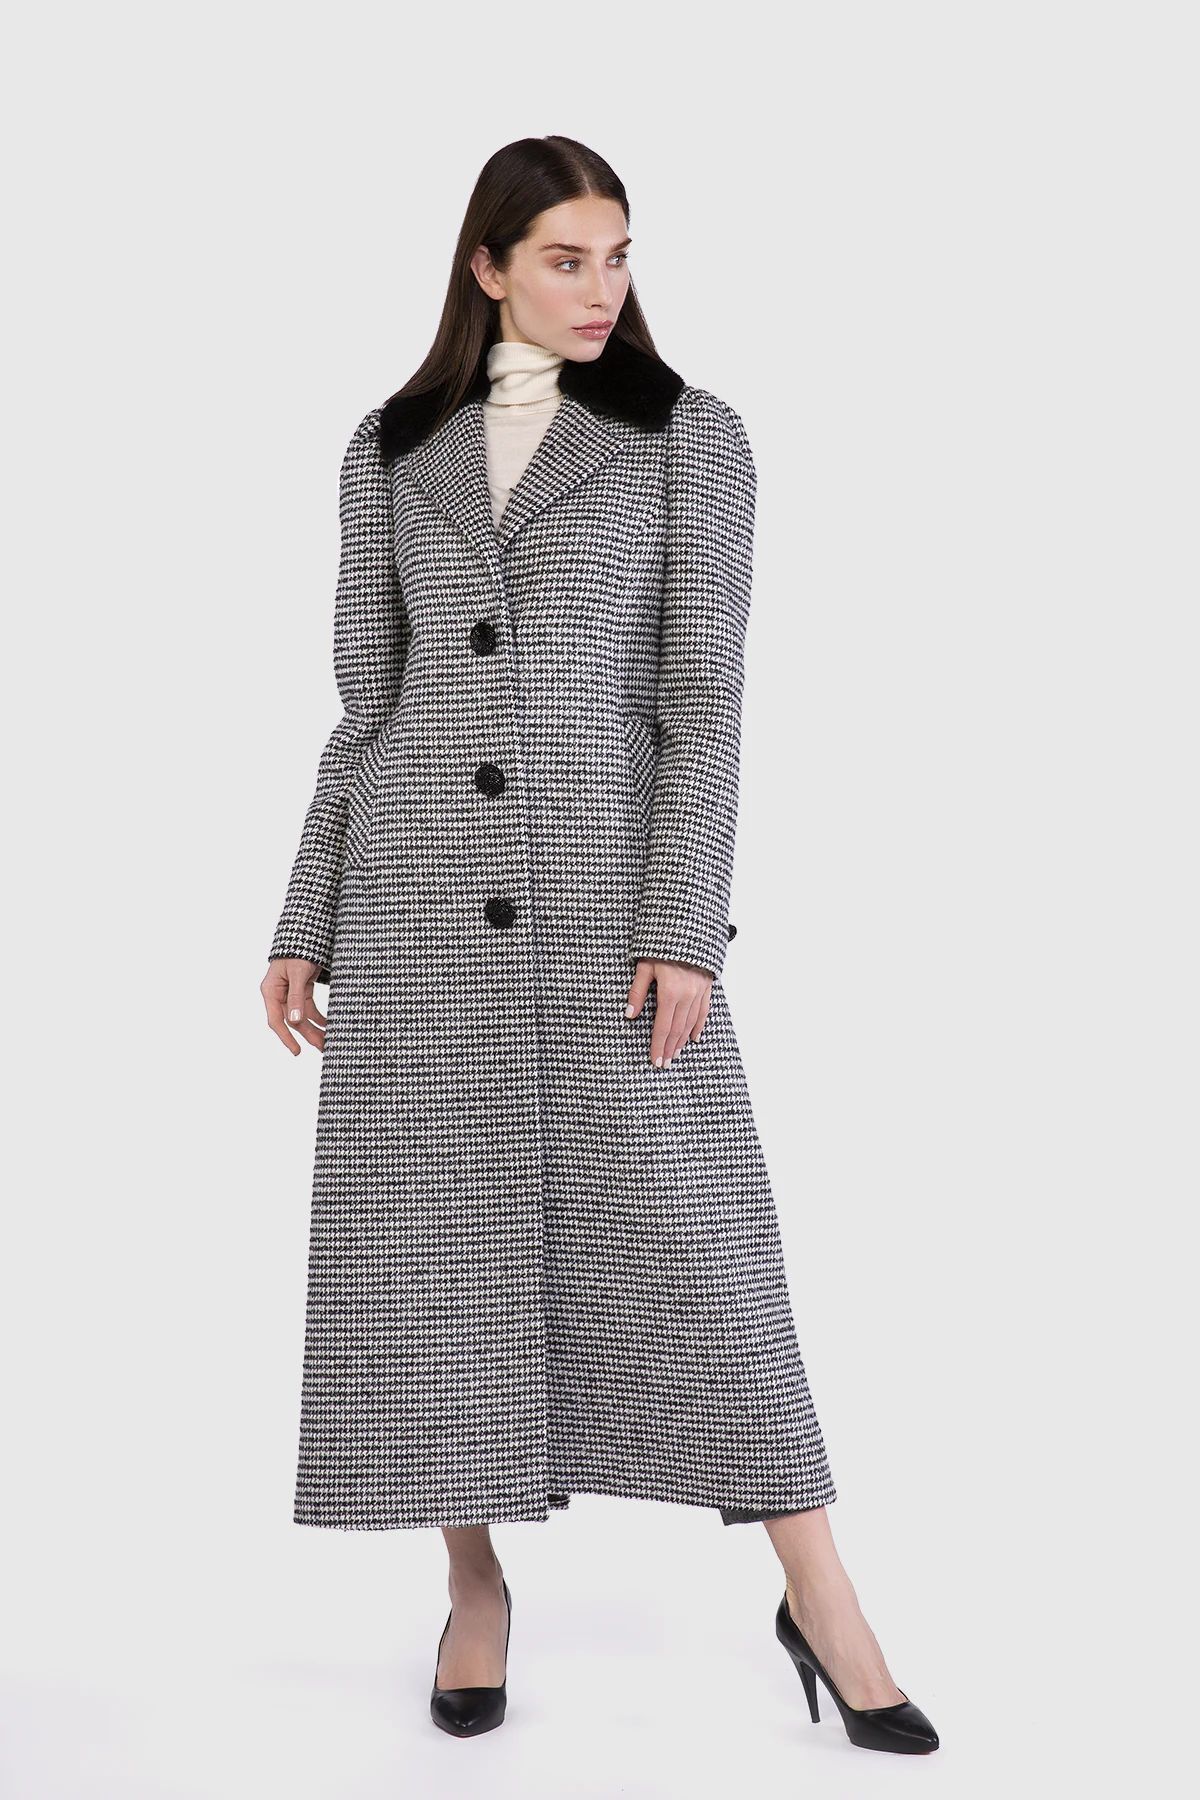  GIZIA - Fur Collar Long Cachet Black Coat